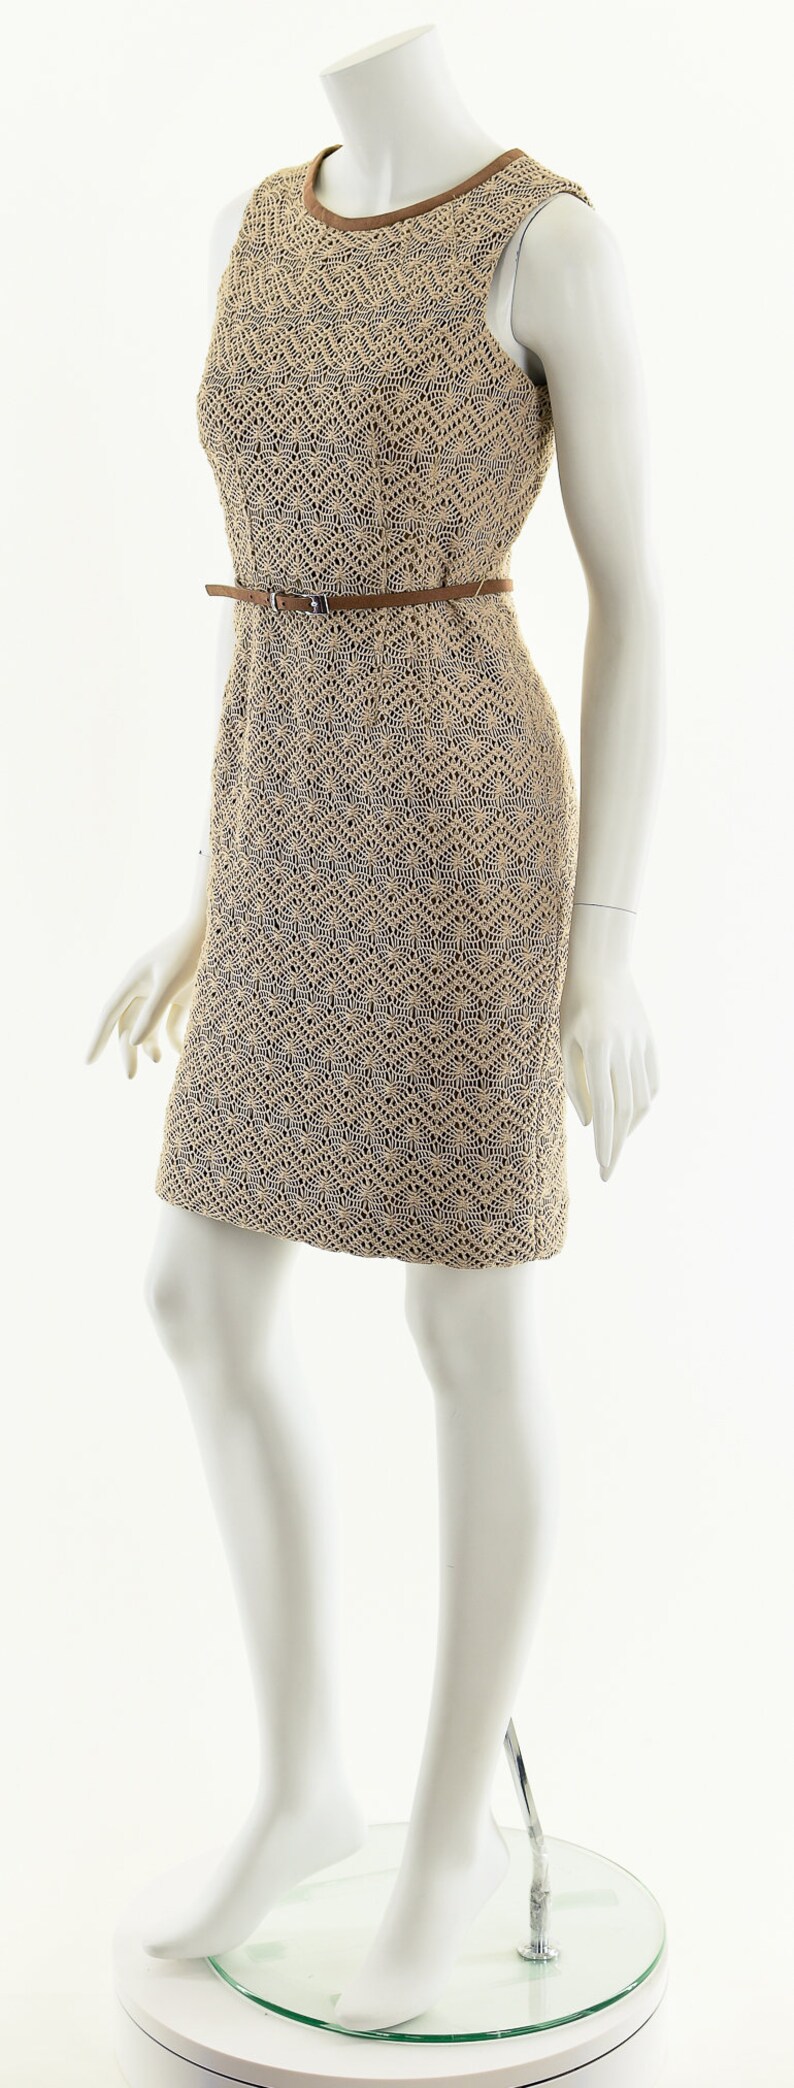 Crochet Lace Dress,Vintage Crochet Dress,Hand Crochet Dress,Knit Shift Dress,Mod Retro Dress,Vintage Pencil Dress,Bodycon Feminine Dress image 10